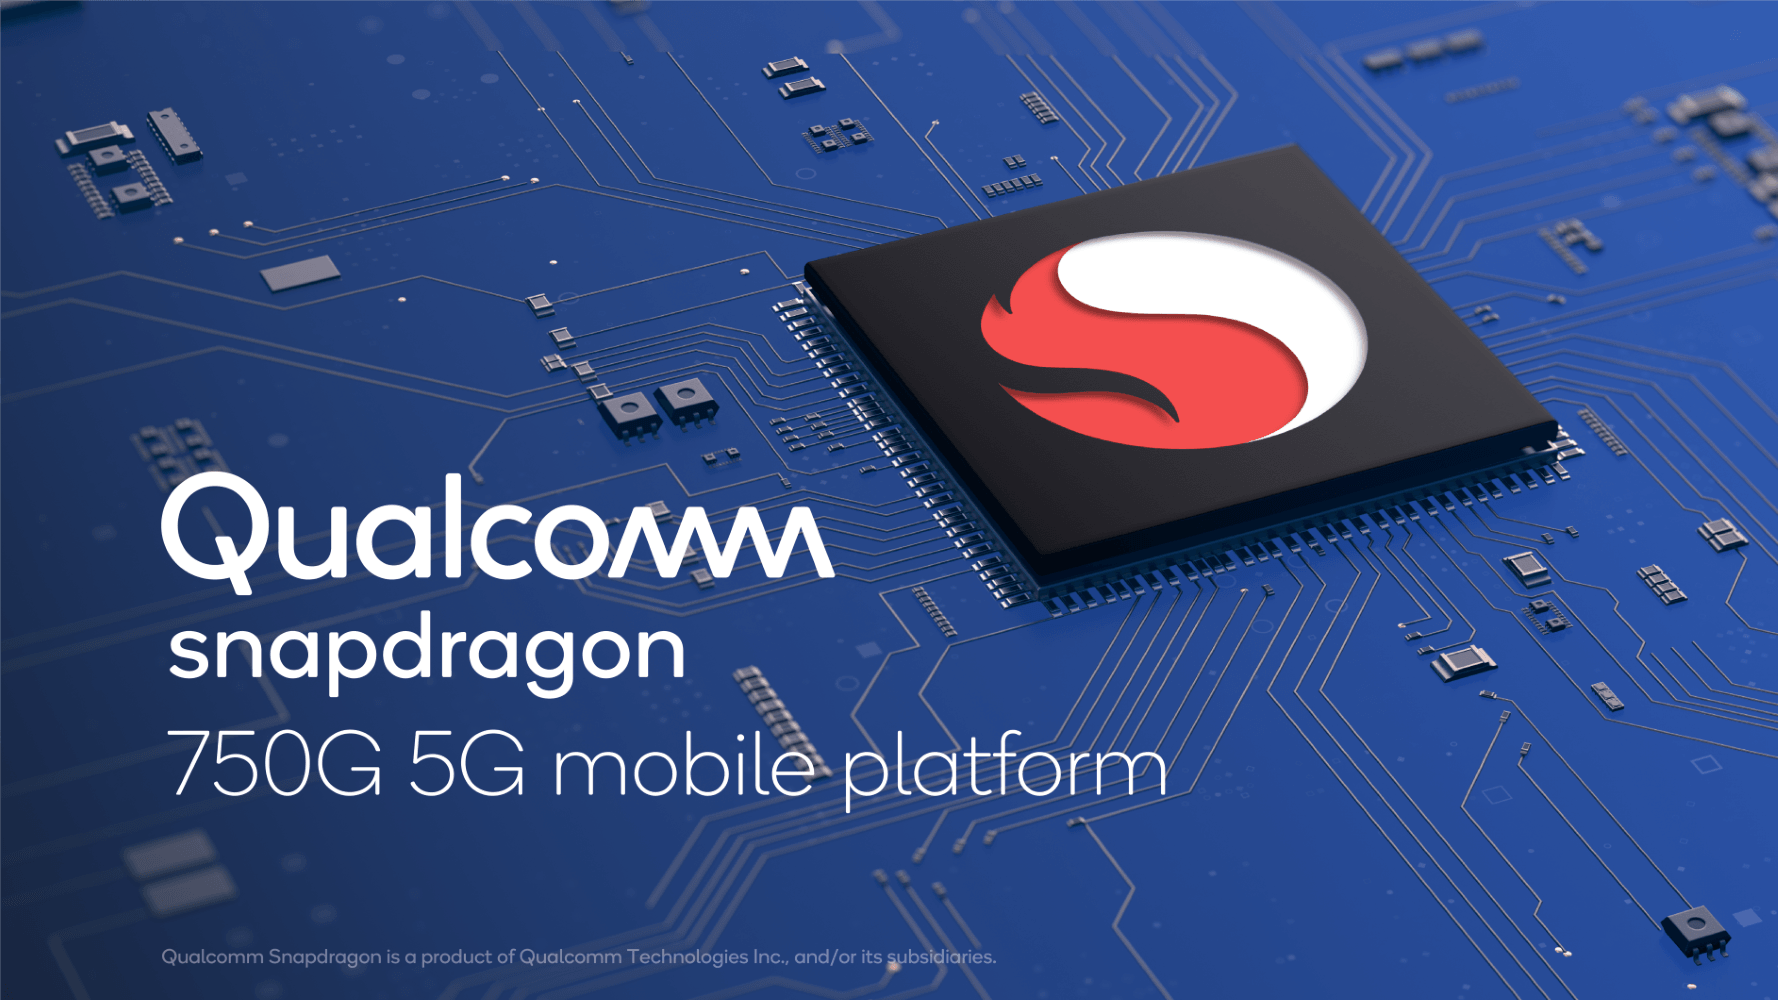 Qualcomm Snapdragon 750G 5G Mobile Platformを発表、Snapdragon 7シリーズにおいてARM Cortex-A77を初採用